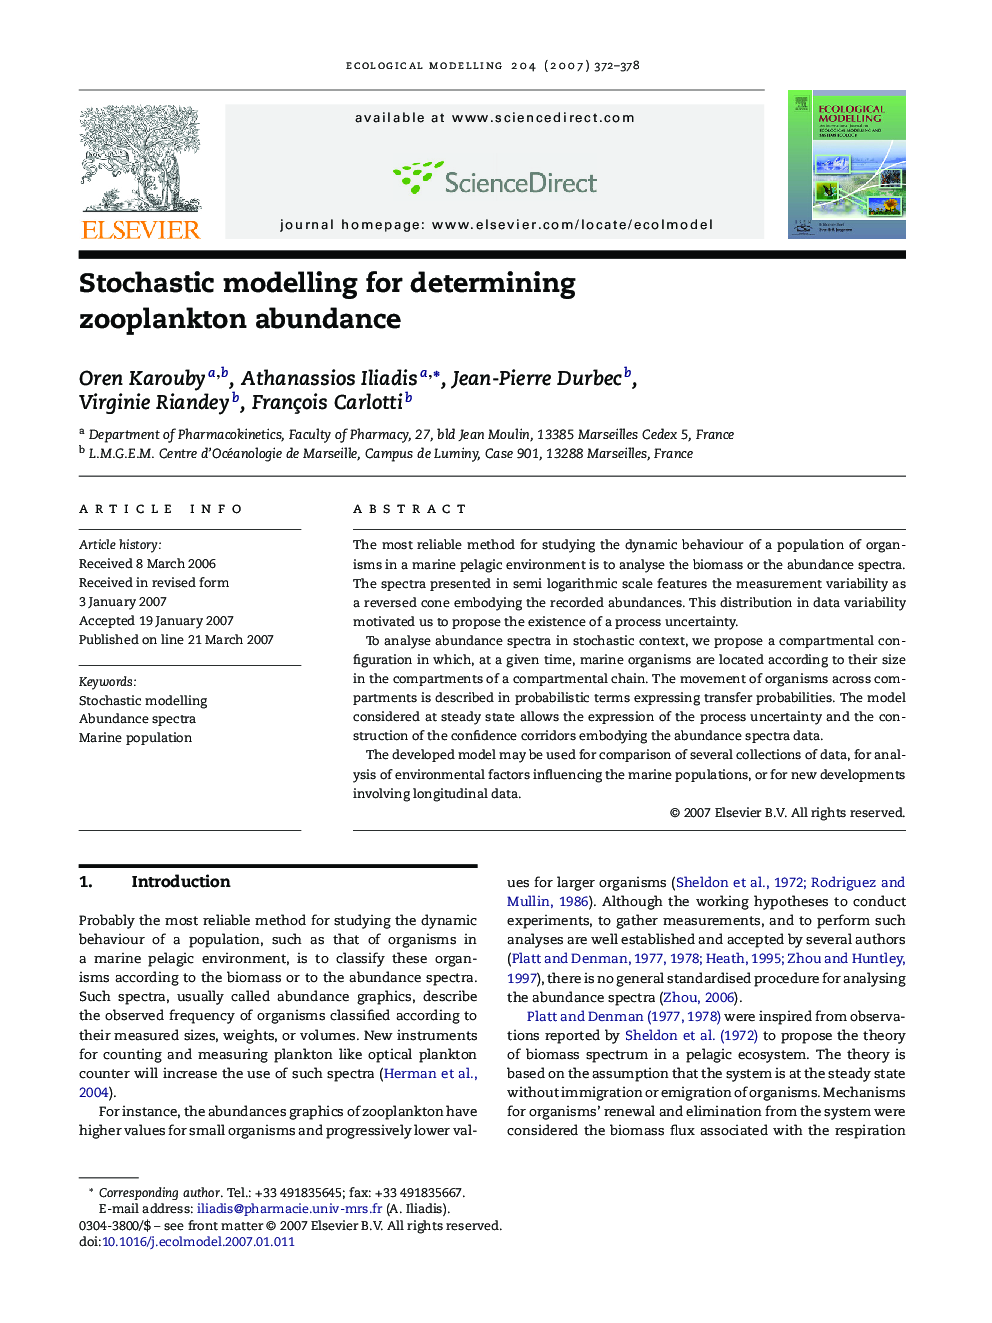 Stochastic modelling for determining zooplankton abundance